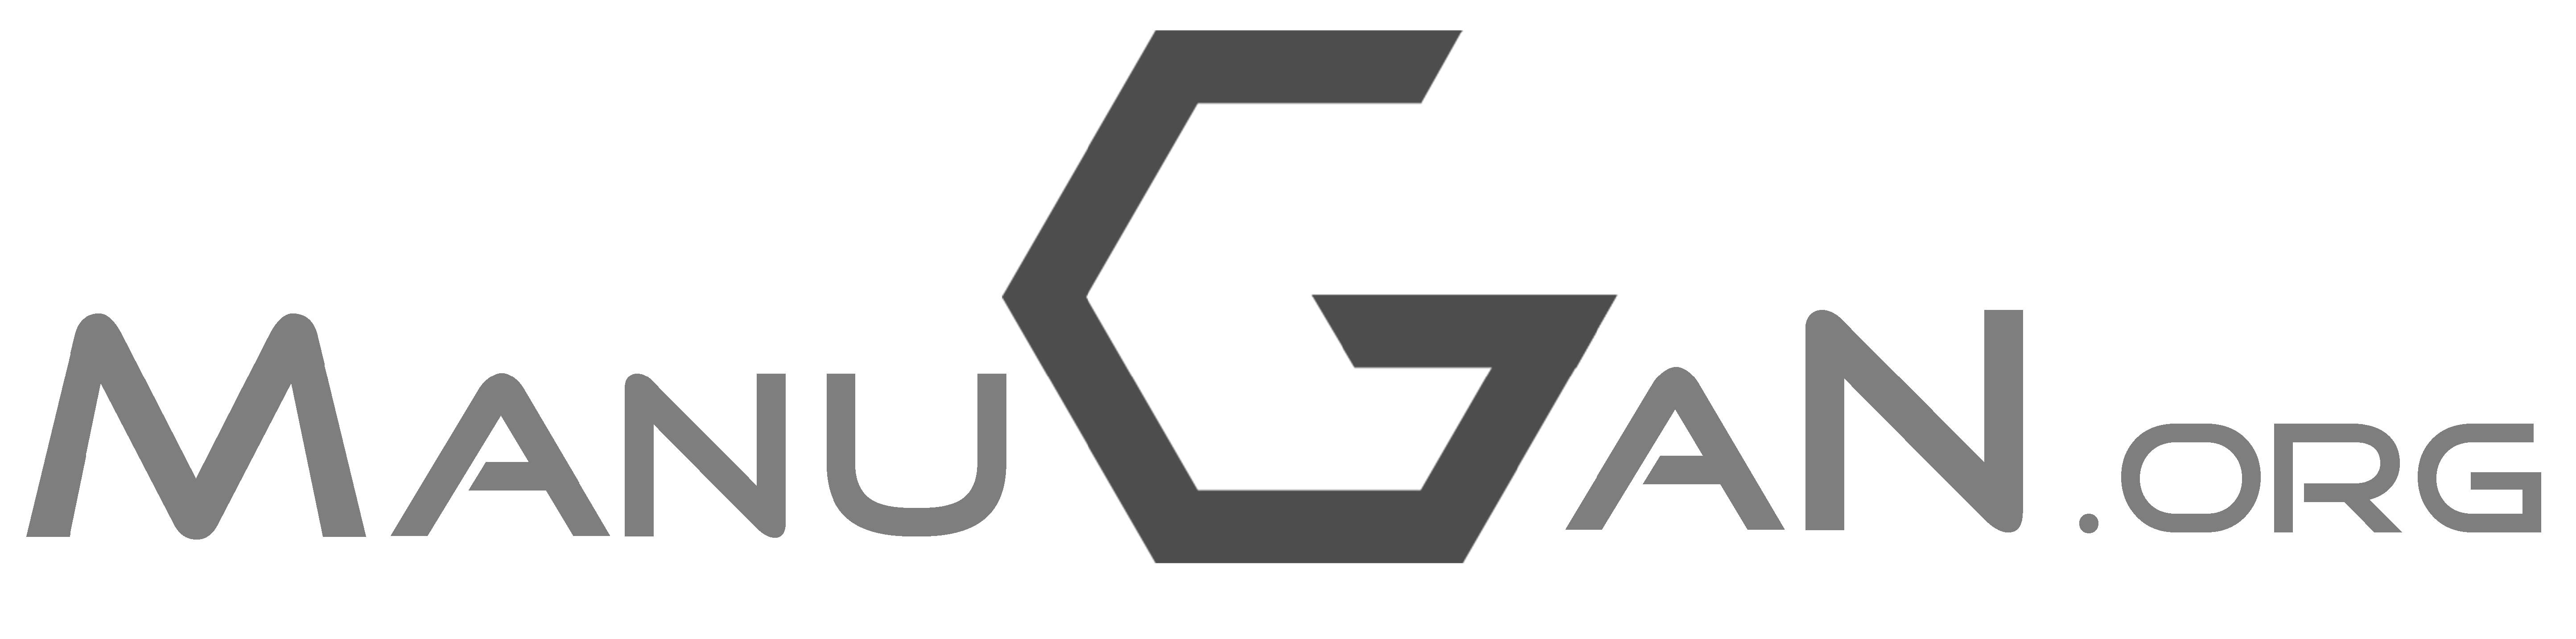 ManuGaN logo